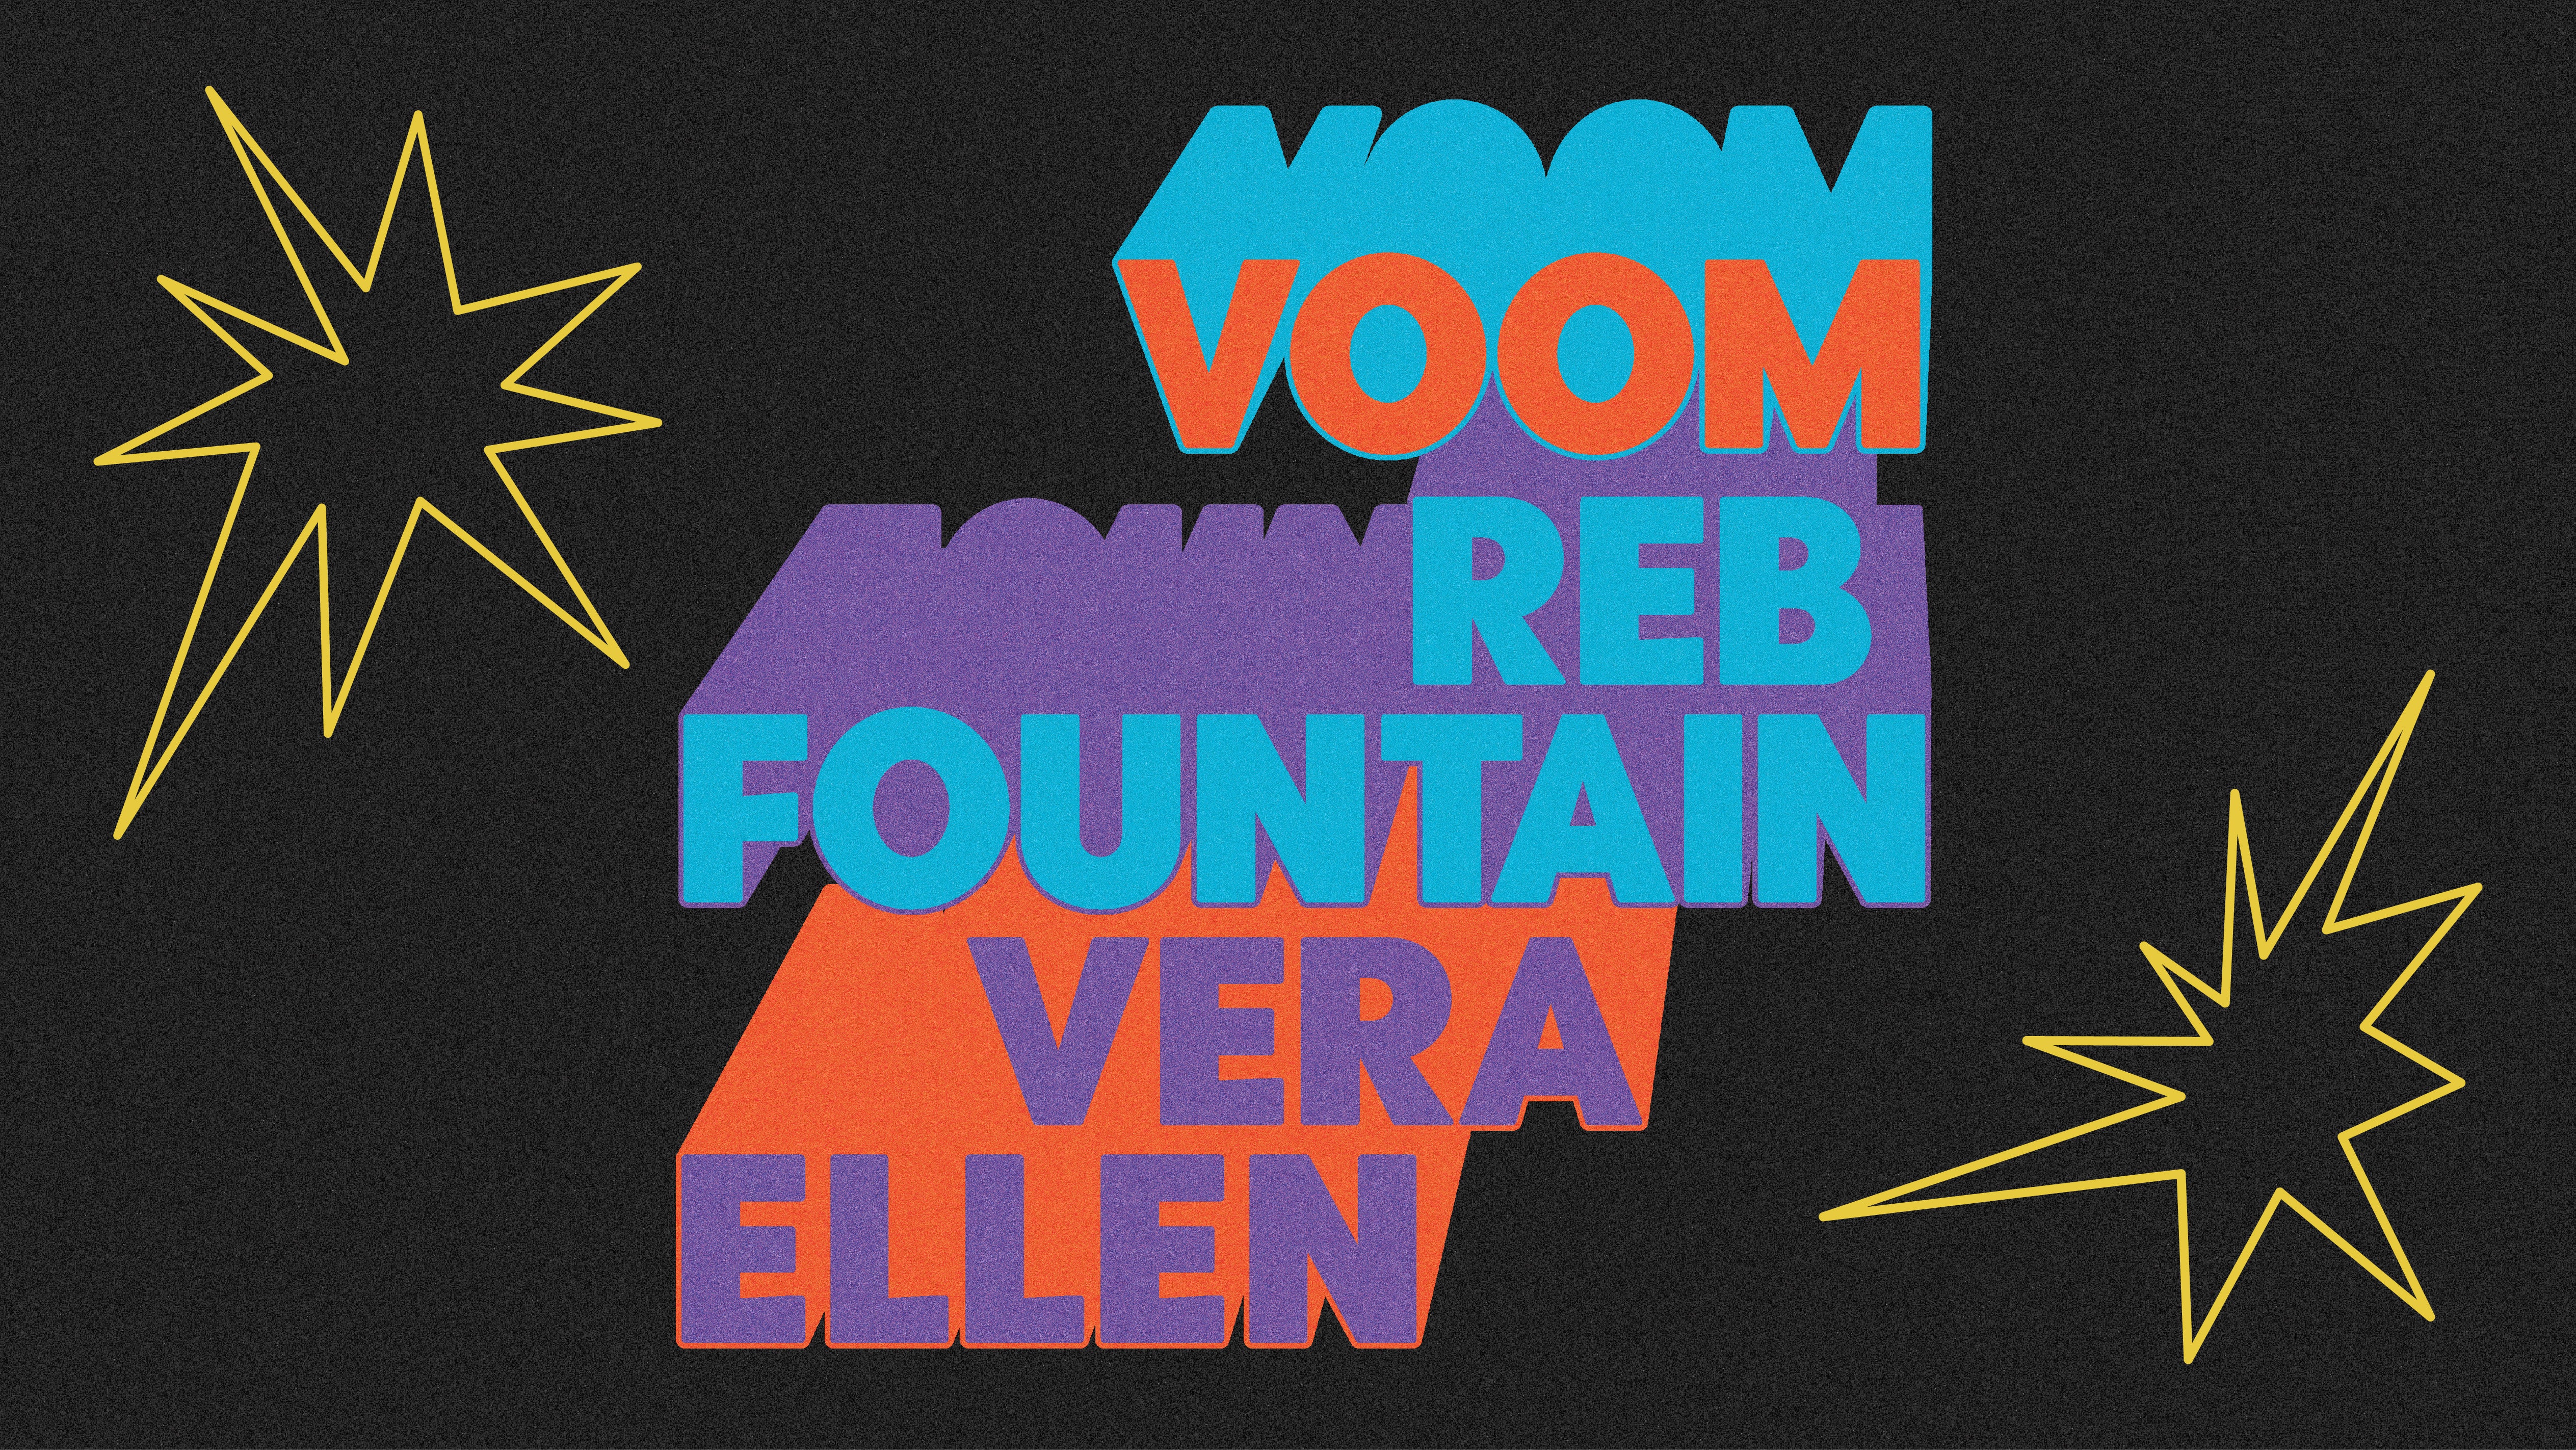 Voom Reb Fountain Vera Ellen in Mount Cook promo photo for Exclusive presale offer code